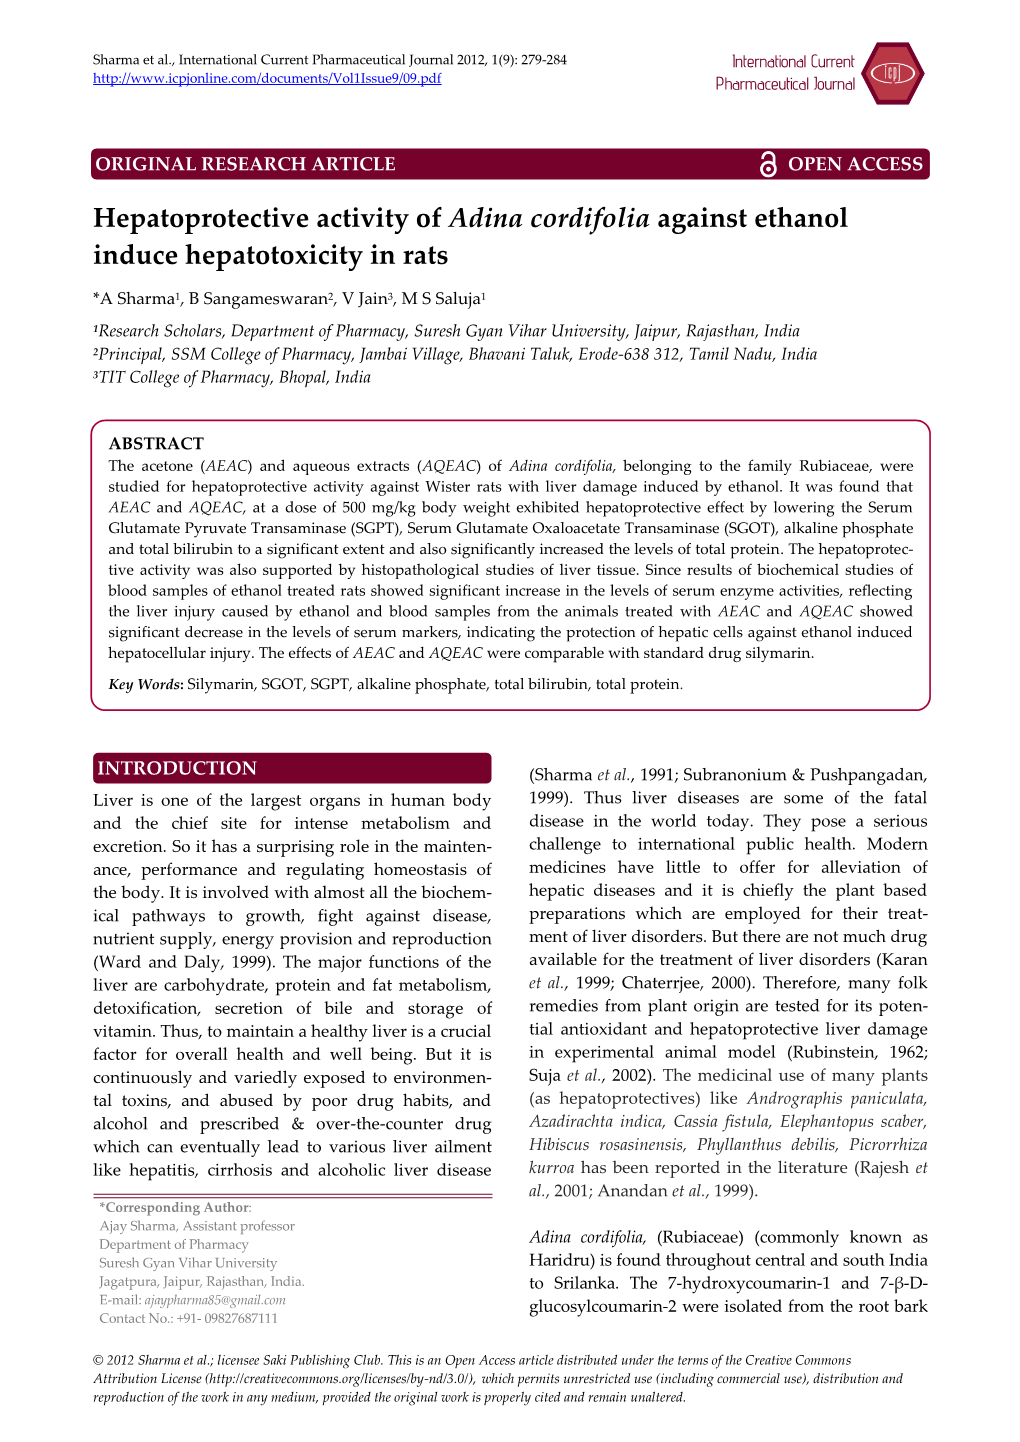 Hepatoprotective Activity of Adina Cordifolia Against Ethanol Induce Hepatotoxicity in Rats